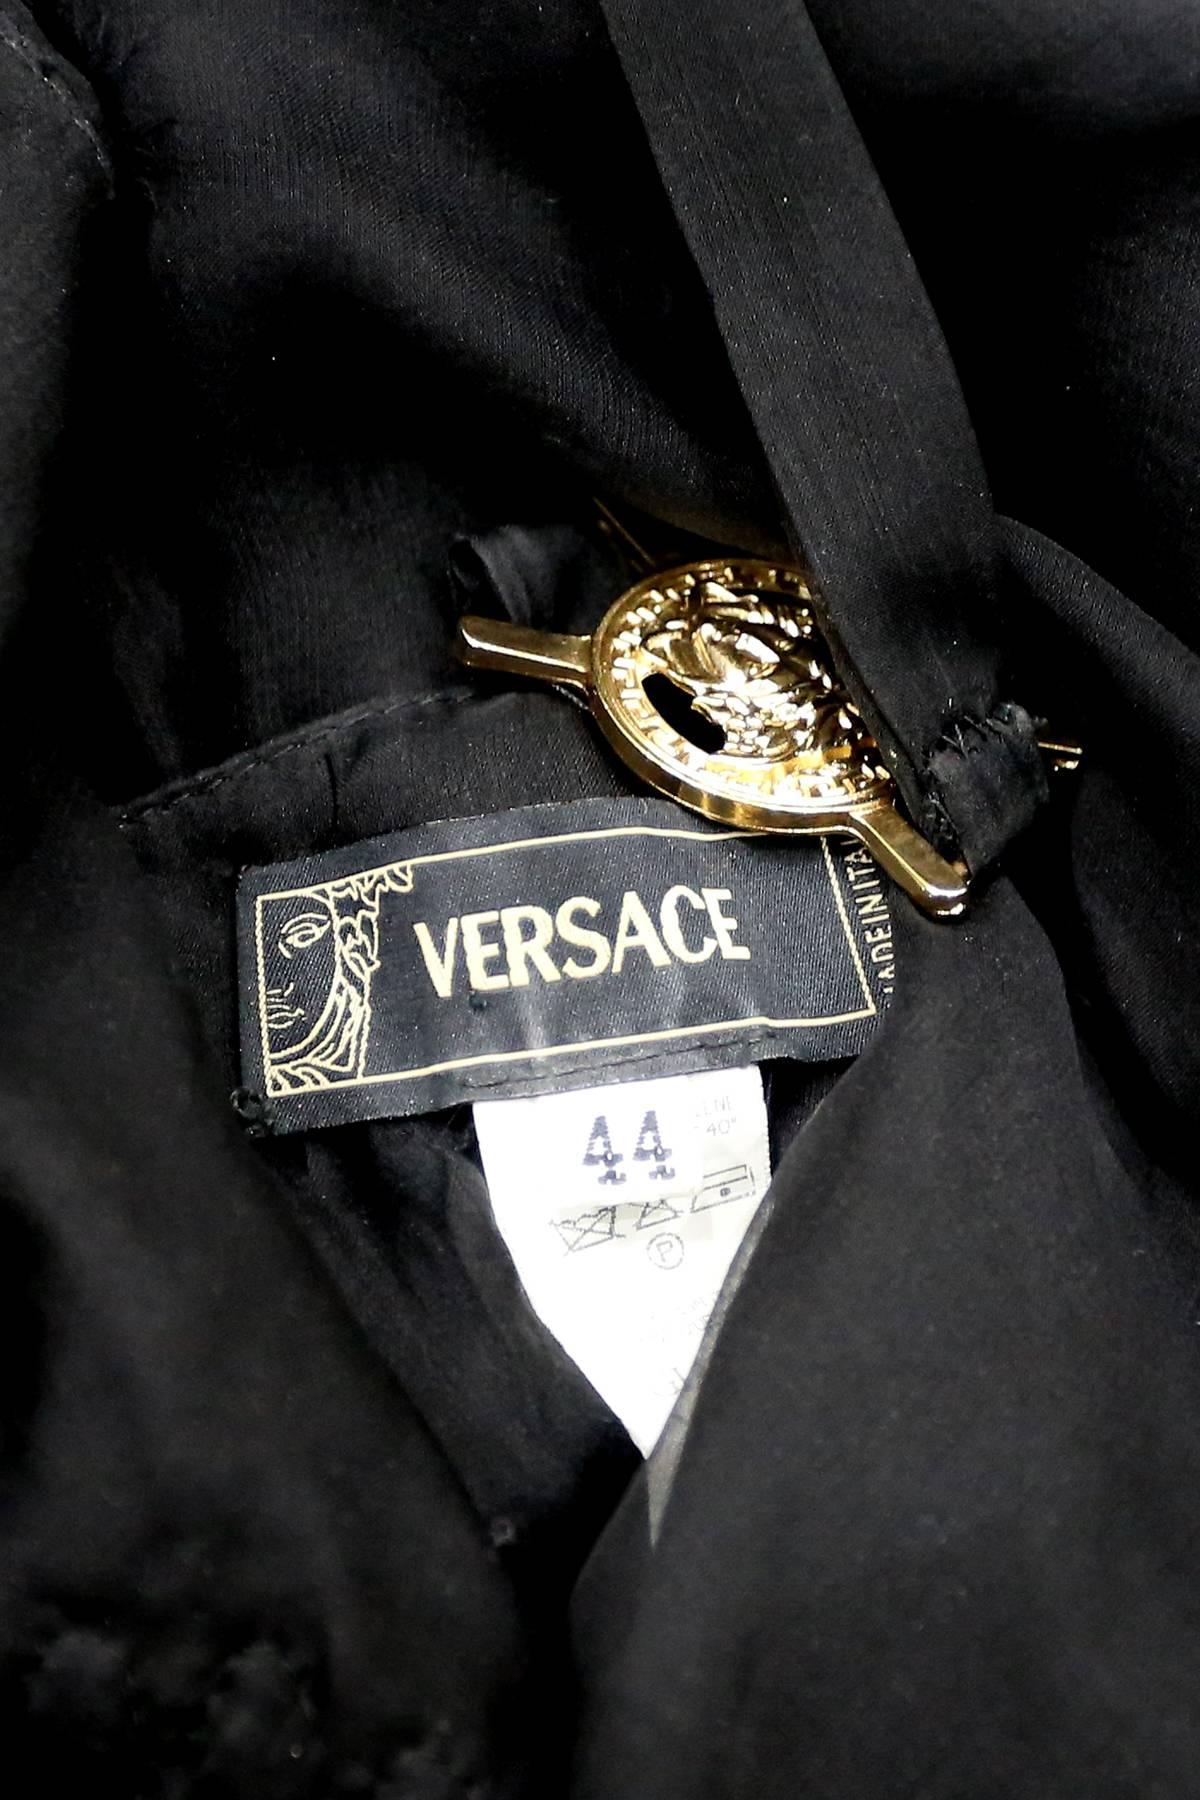 Black Versace bondage medusa harness evening dress with sheer lace panel, c. 2000s